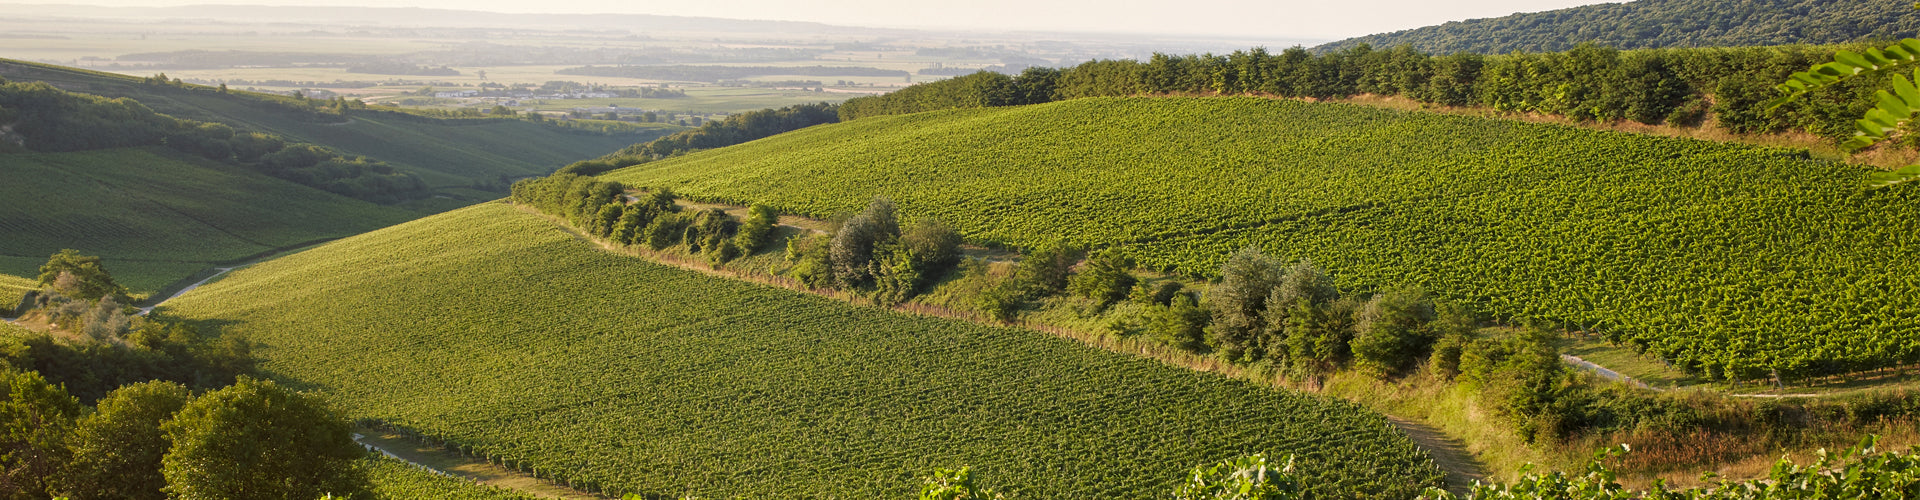 Sauska Vineyards in Tokaj, Hungary